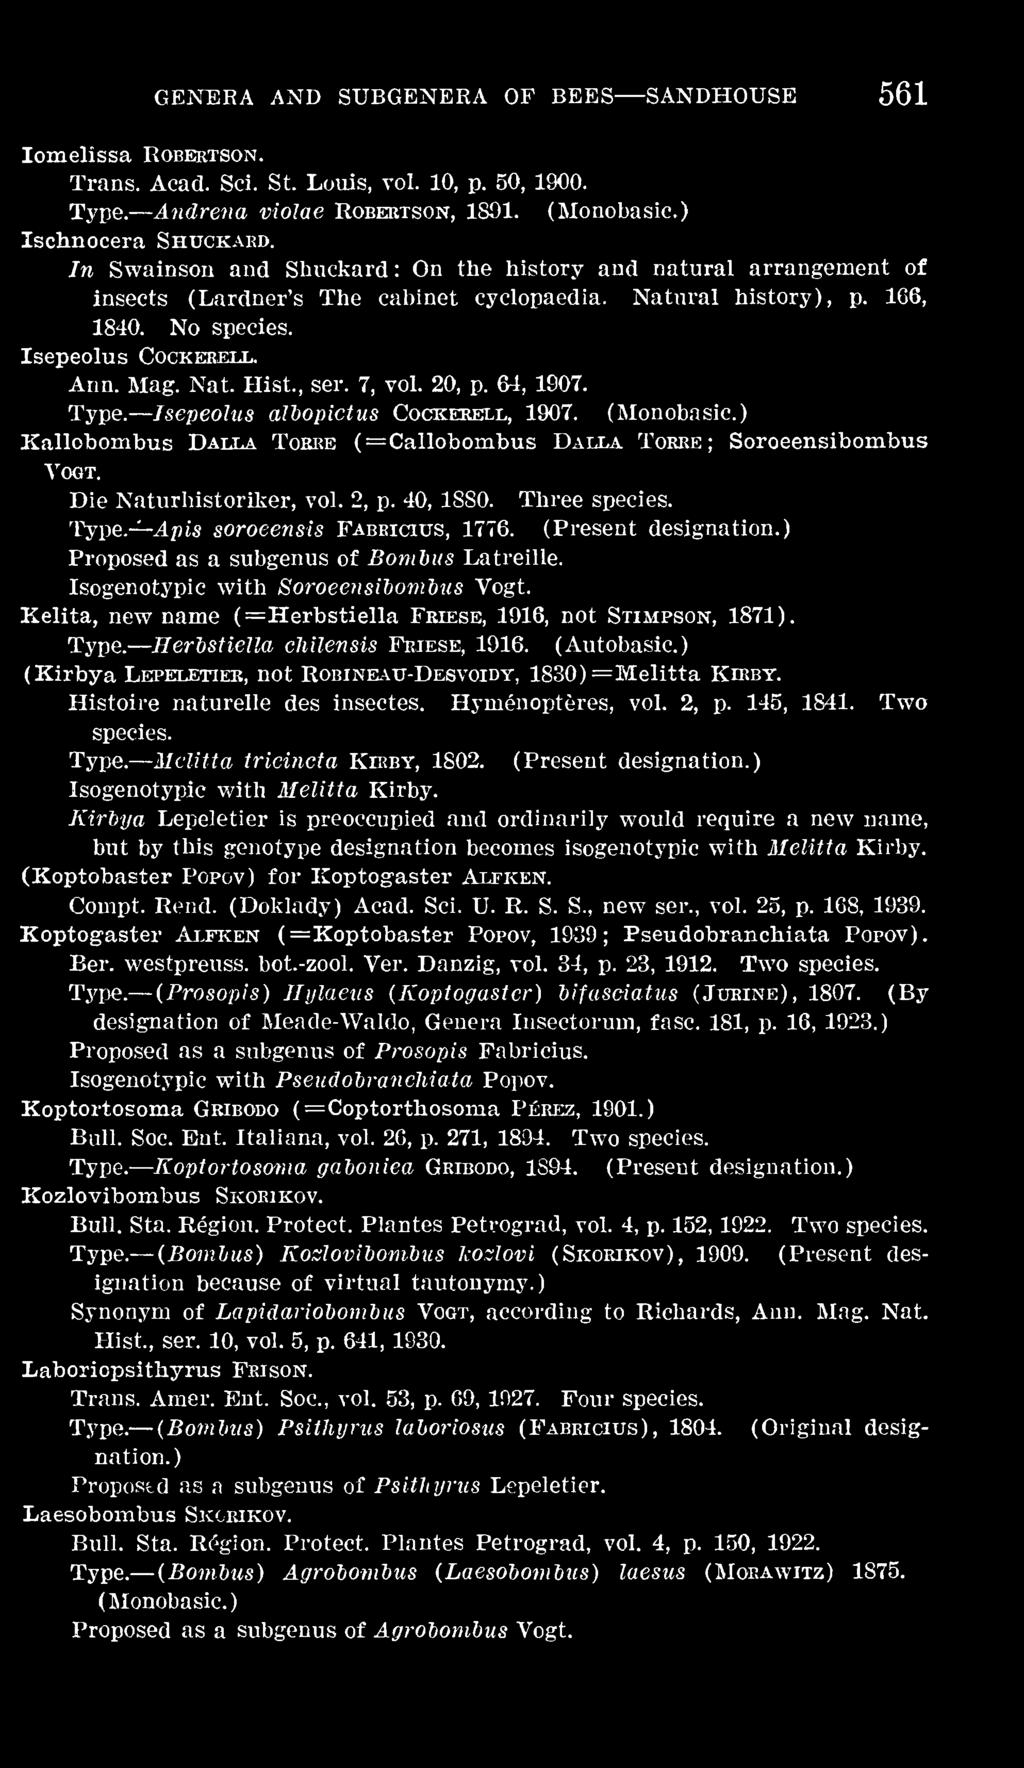 , ser. 7, vol. 20, p. 64, 1907. Isepeolus albopictus CocKEREn:.L, 1907. (Monobasic.) Kallobombus Dalxa Torre (=Callobombus Daixa Torre; Soroeensibombus VOGT. Die Naturhistoriker, vol. 2, p. 40, 1880.